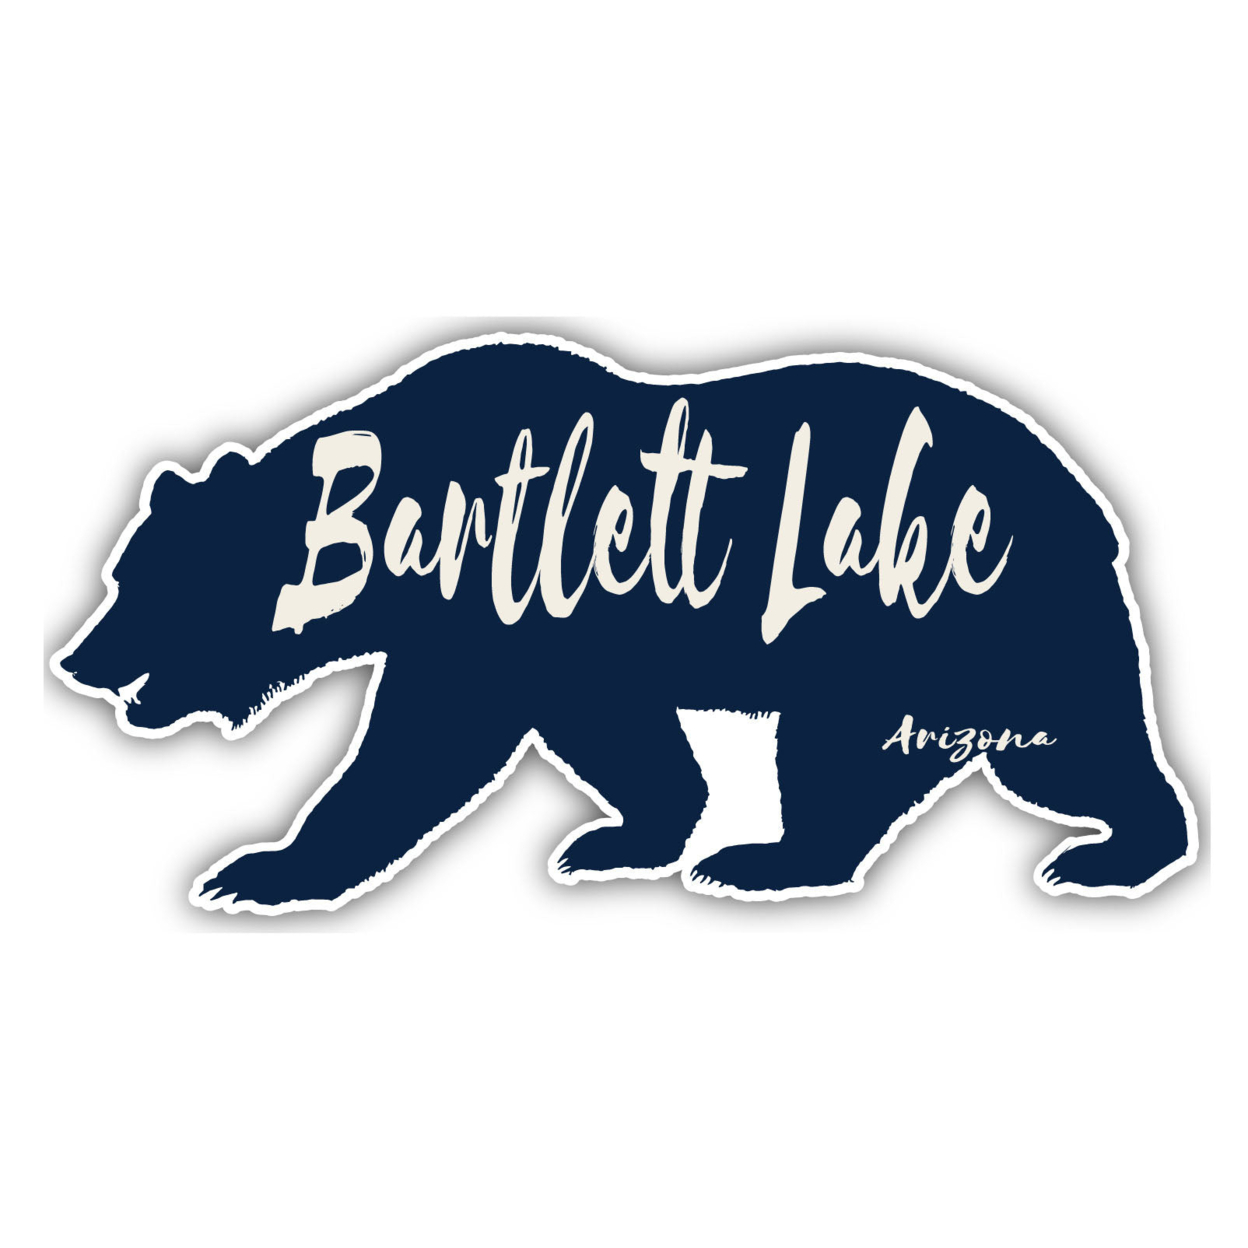 Bartlett Lake Arizona Souvenir Decorative Stickers (Choose Theme And Size) - 4-Pack, 8-Inch, Bear